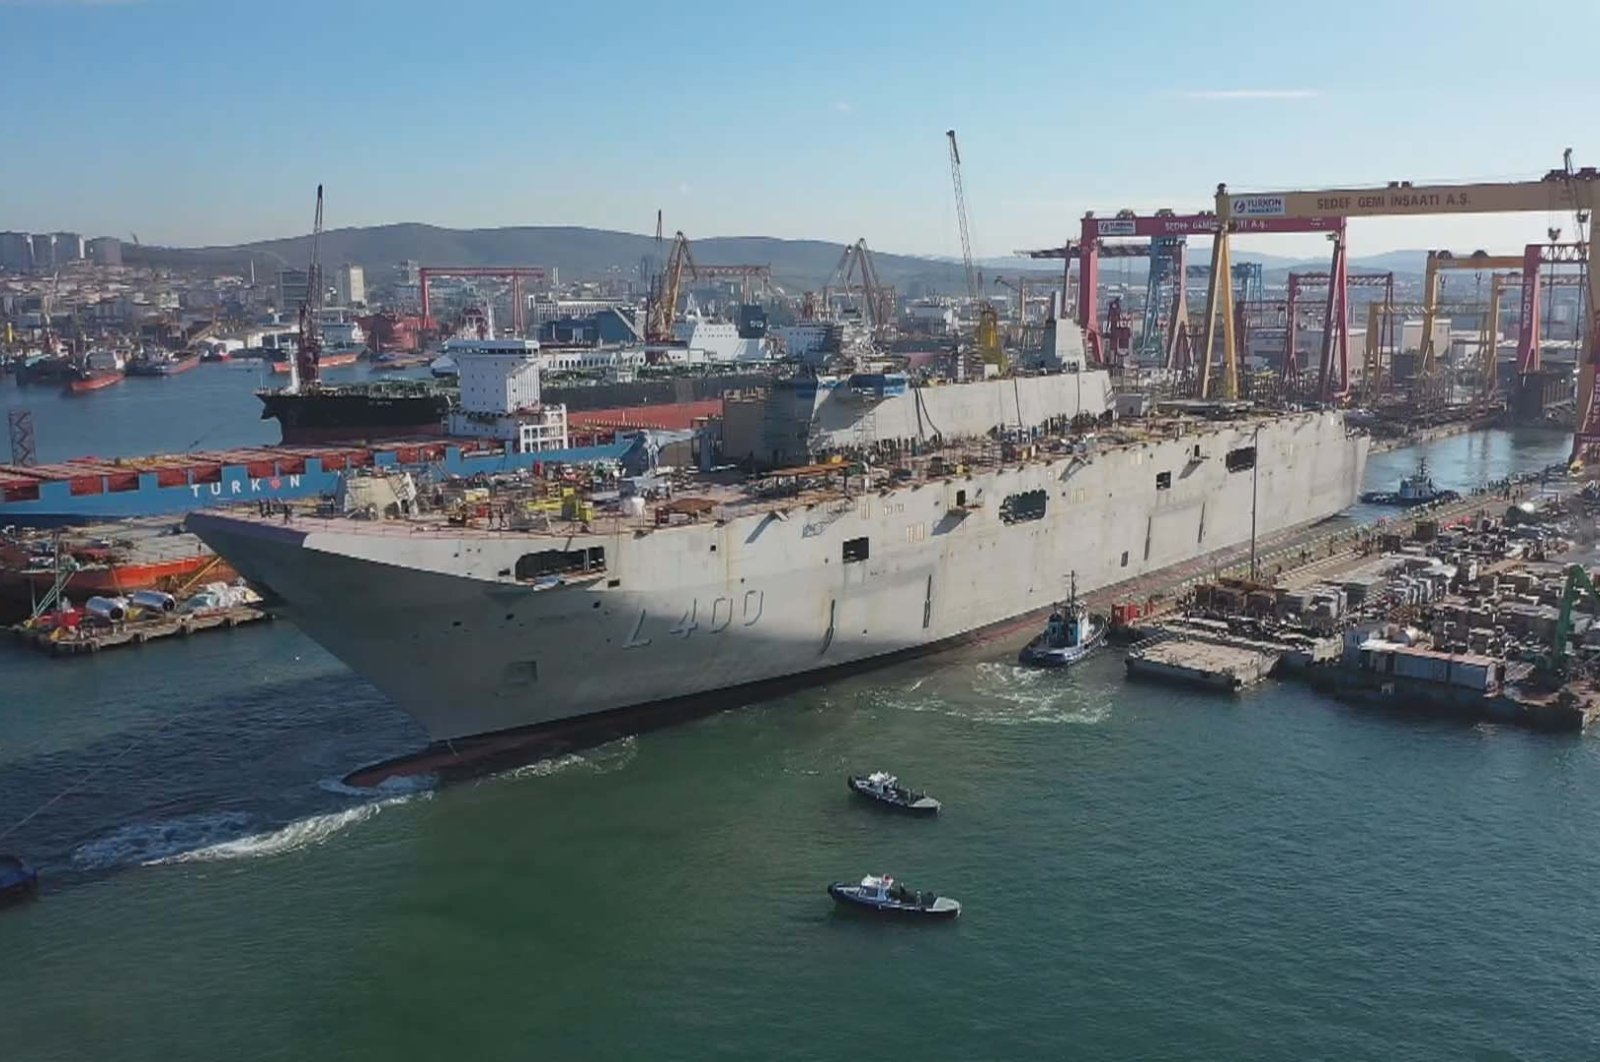 TCG Anadolu seen at the Sedef Shipyard in Tuzla, Istanbul, Turkey, Oct. 26, 2021. (DHA Photo)

